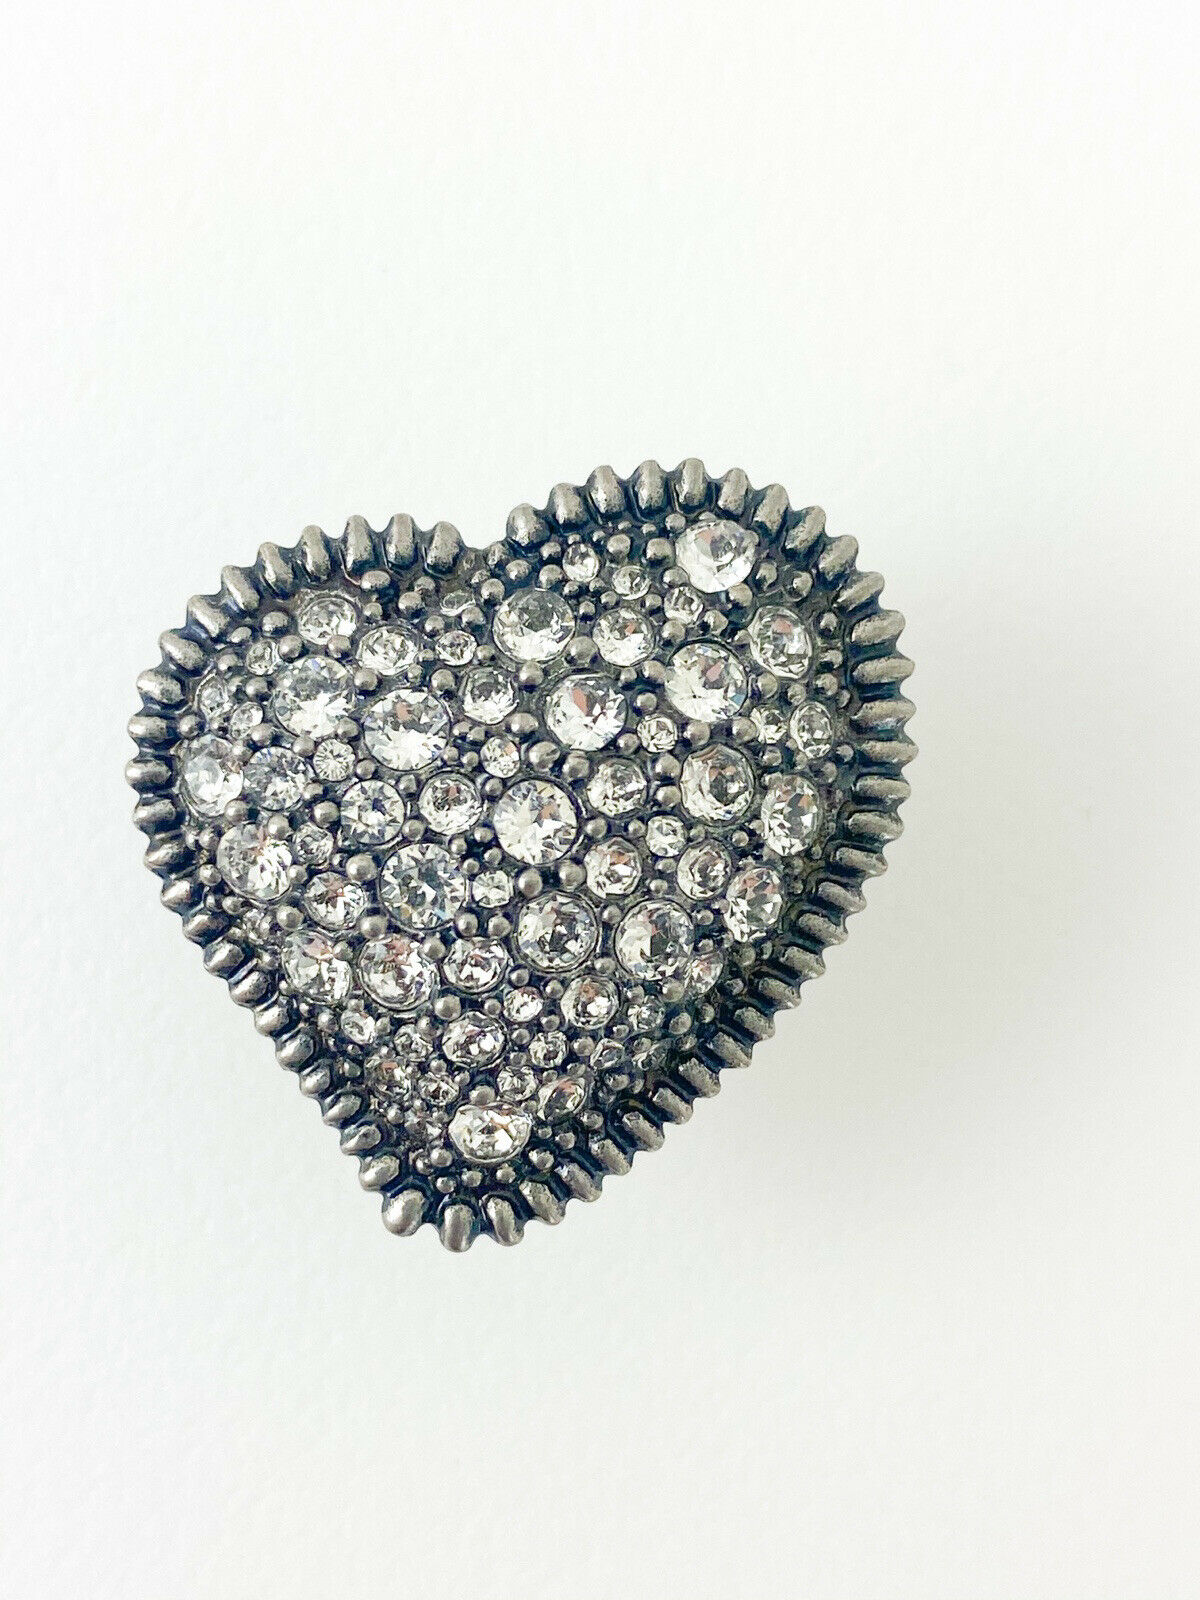 Yves Saint Laurent heart pin brooch 